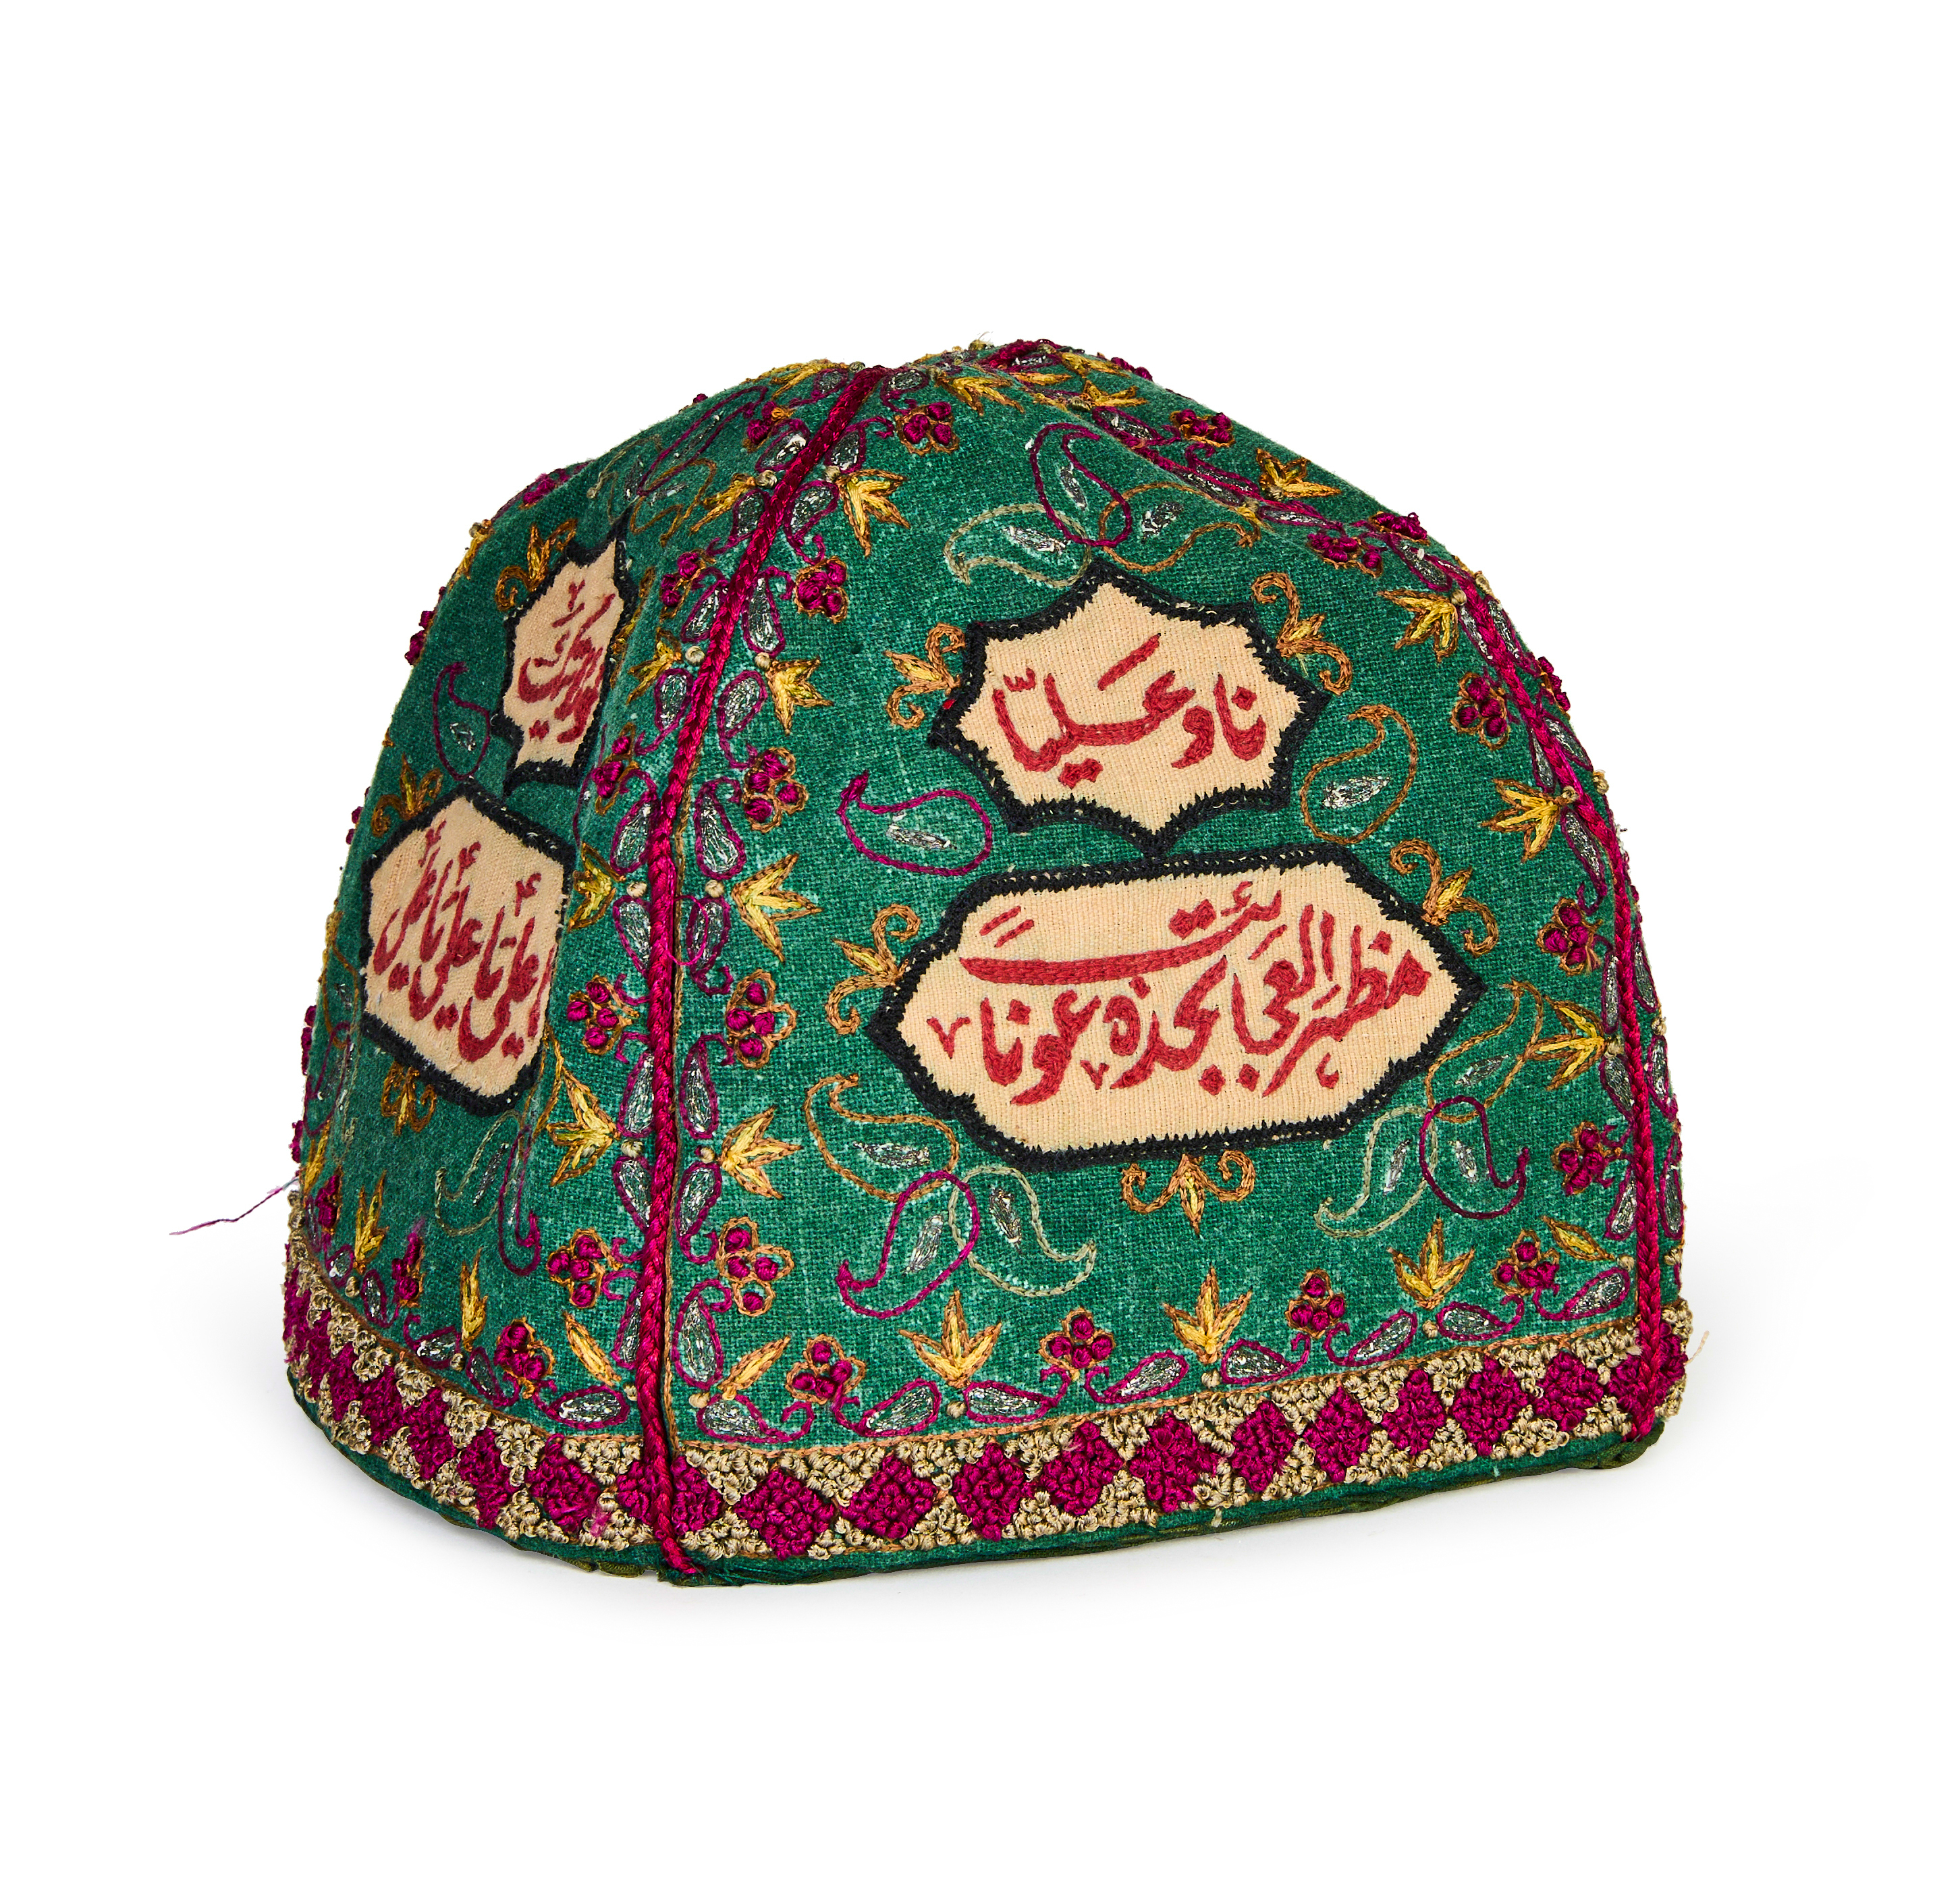 AN INSCRIBED FELT DERVISH HAT, 19TH CENTURY